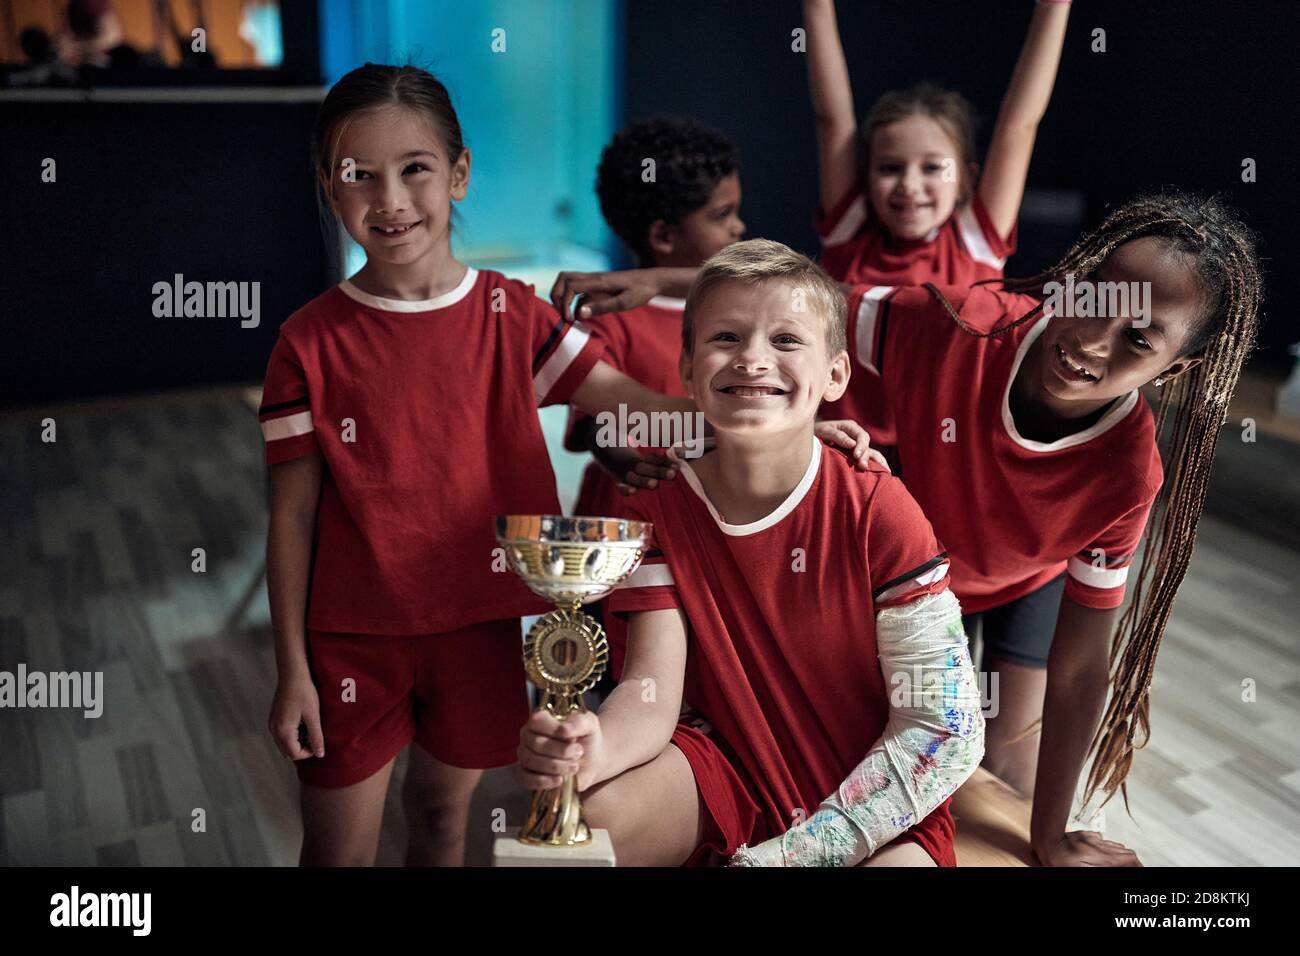 Kids team at the locker room posing with won trophy. Children team sport Stock Photo